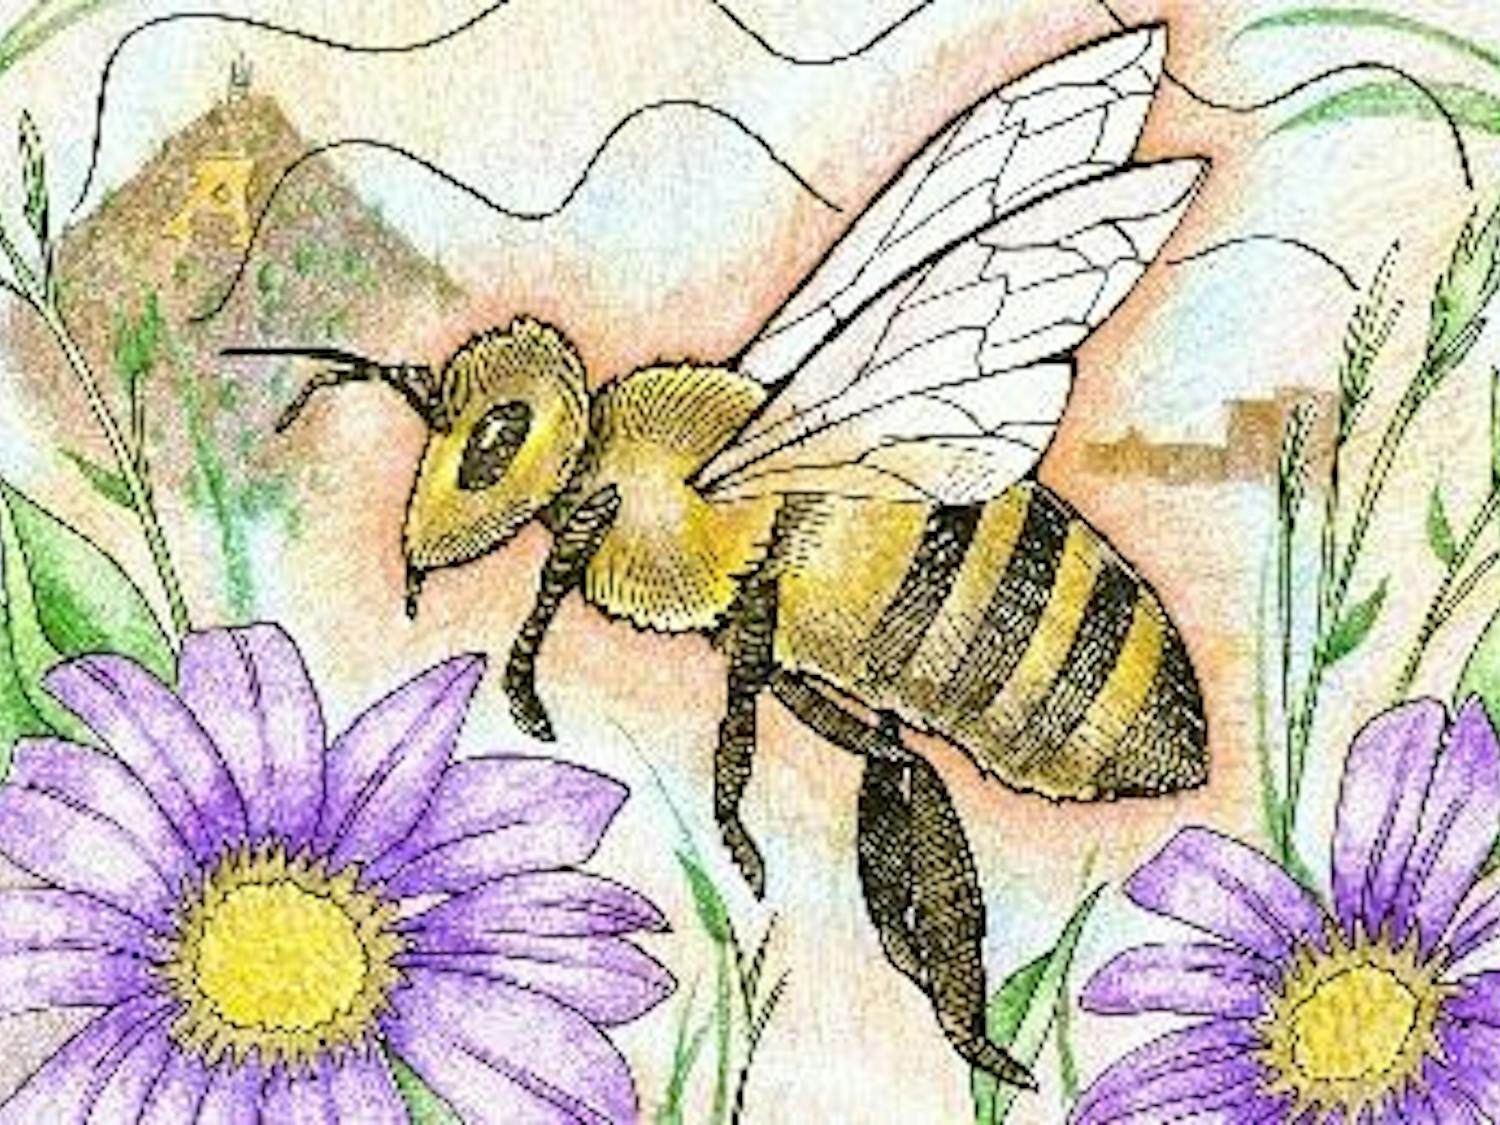 SciTech-Pesticides-Affecting-Bee-Populations-villar-1121.jpg